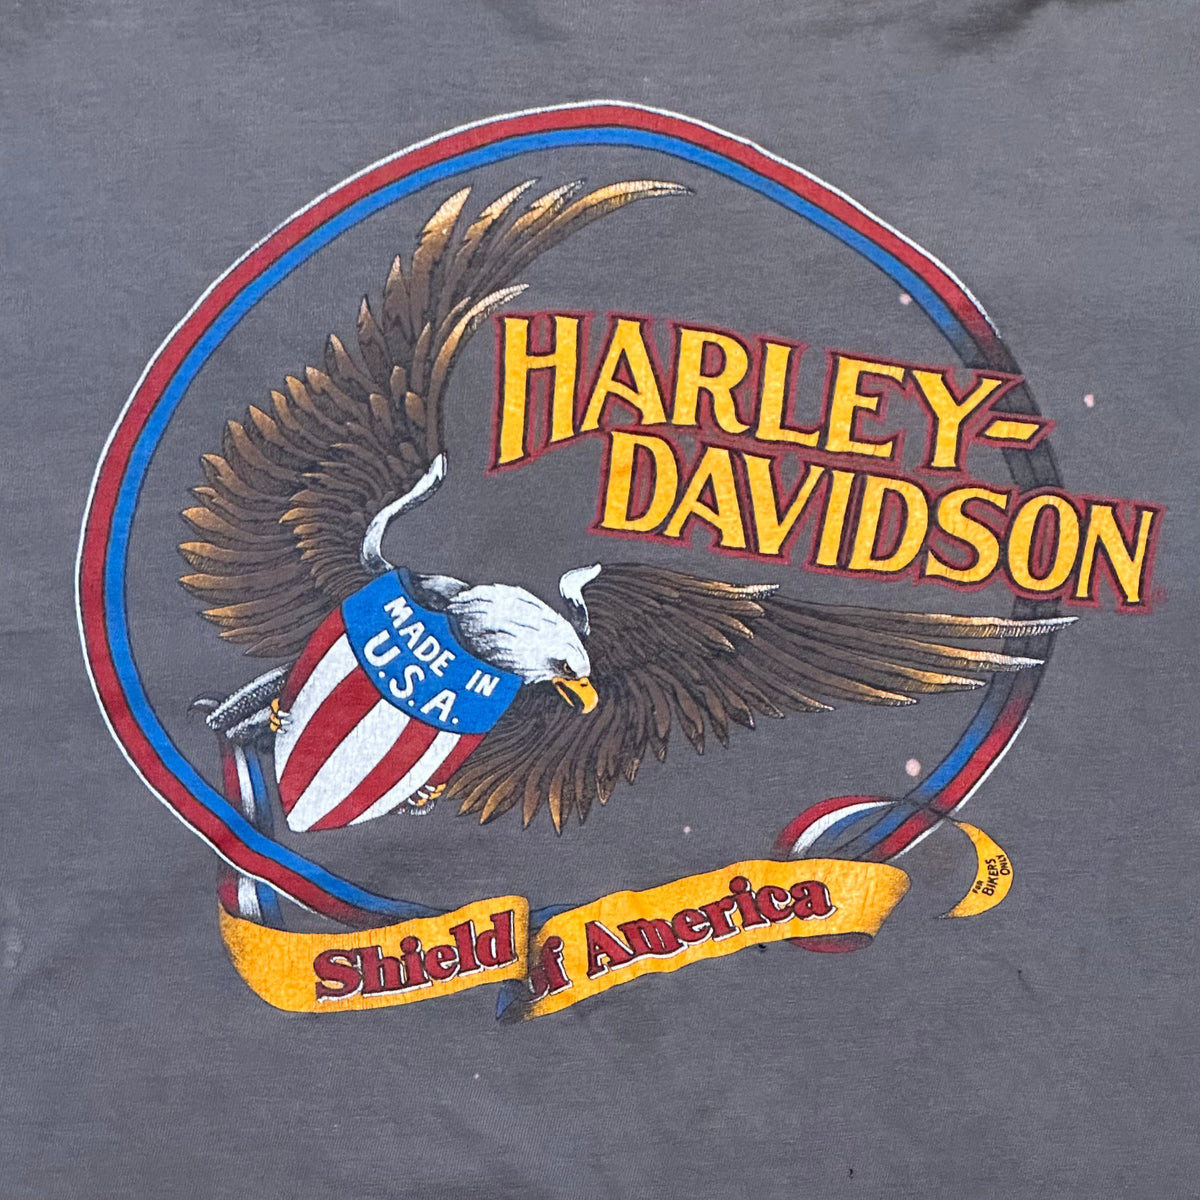 Vintage Harley Davidson Shield Of America shirt